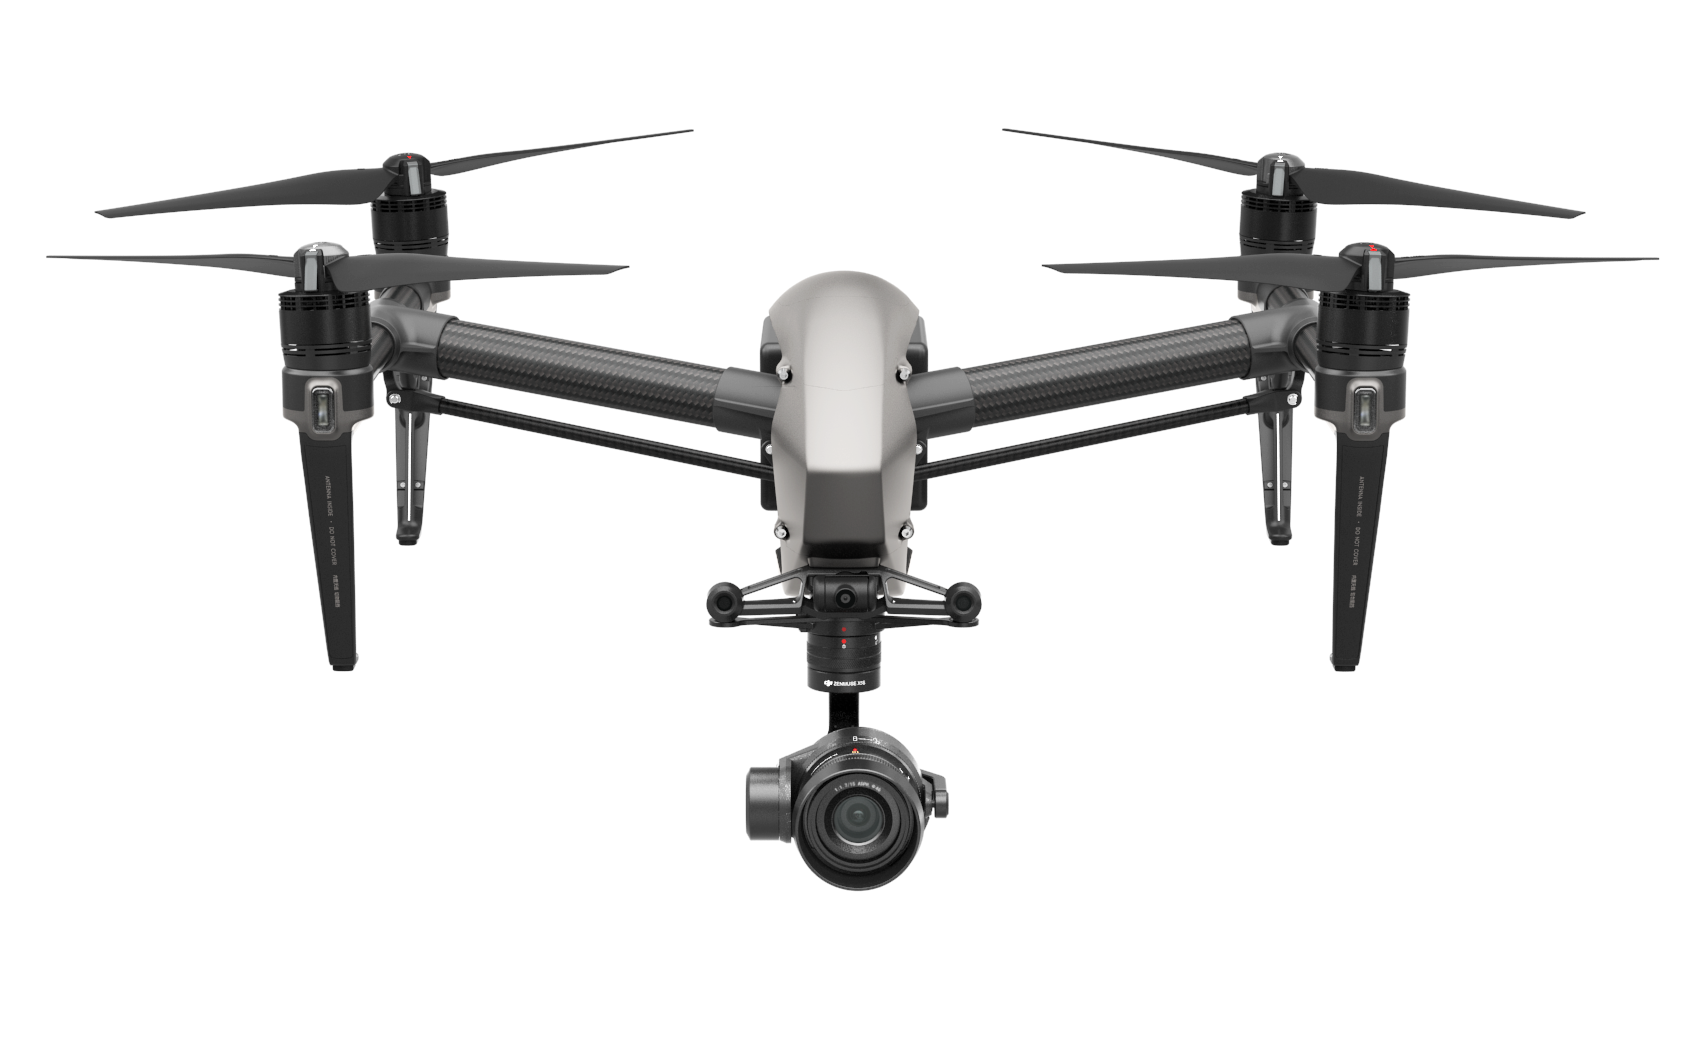 kisspng-mavic-pro-dji-inspire-2-unmanned-aerial-vehicle-dj-phantom-5aee9cac2dd8e6.4310668615255871161878